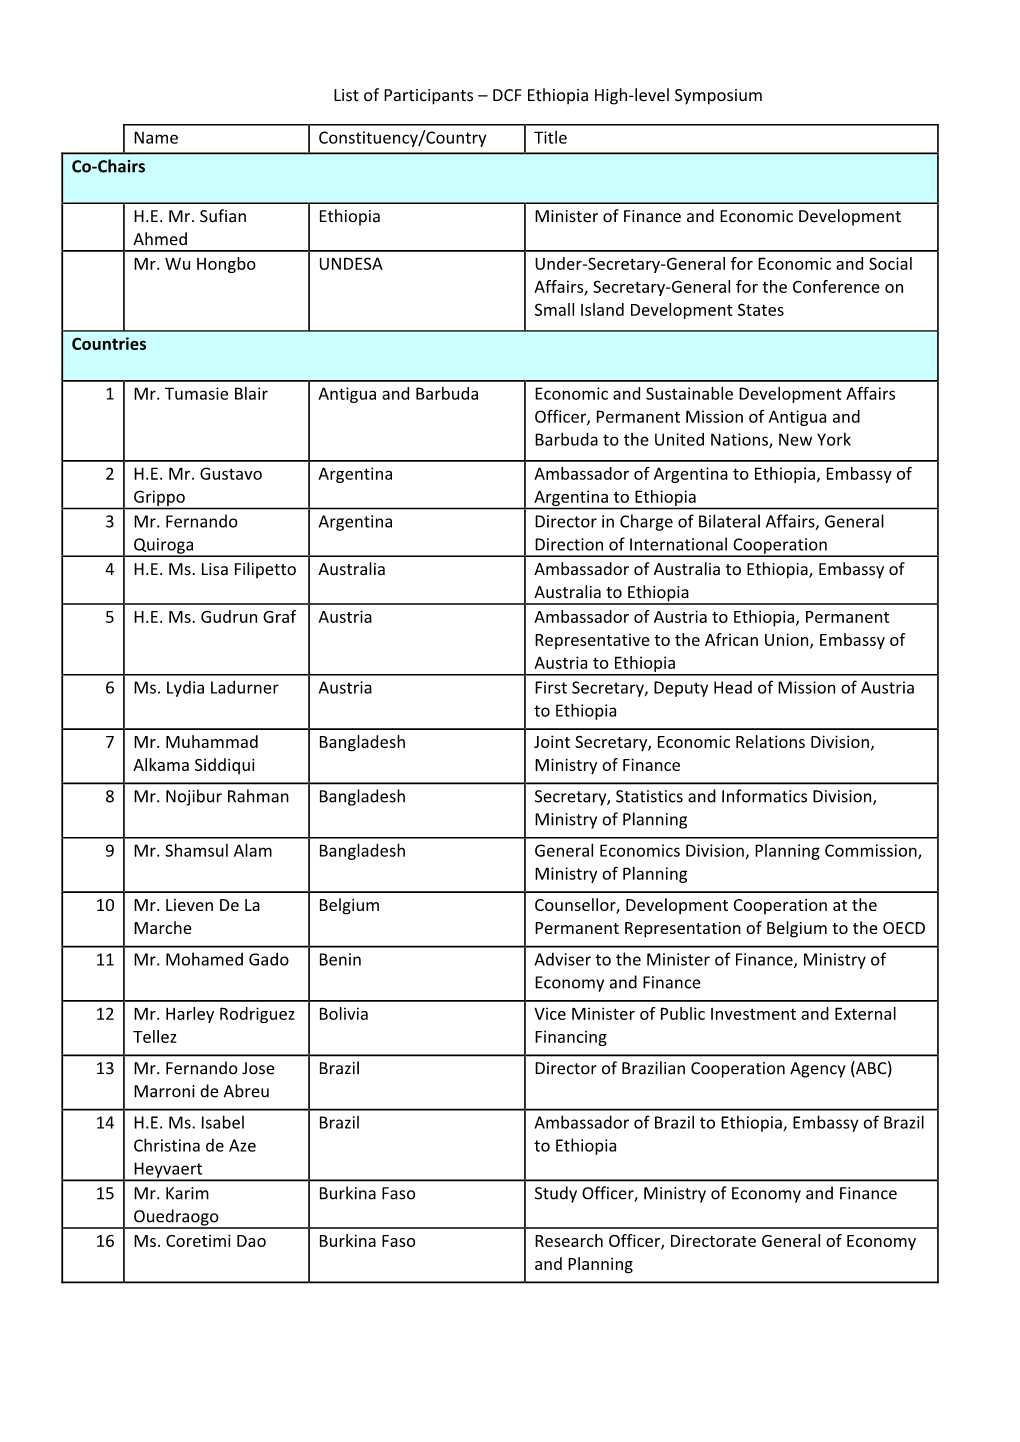 List of Participants – DCF Ethiopia High-Level Symposium Name